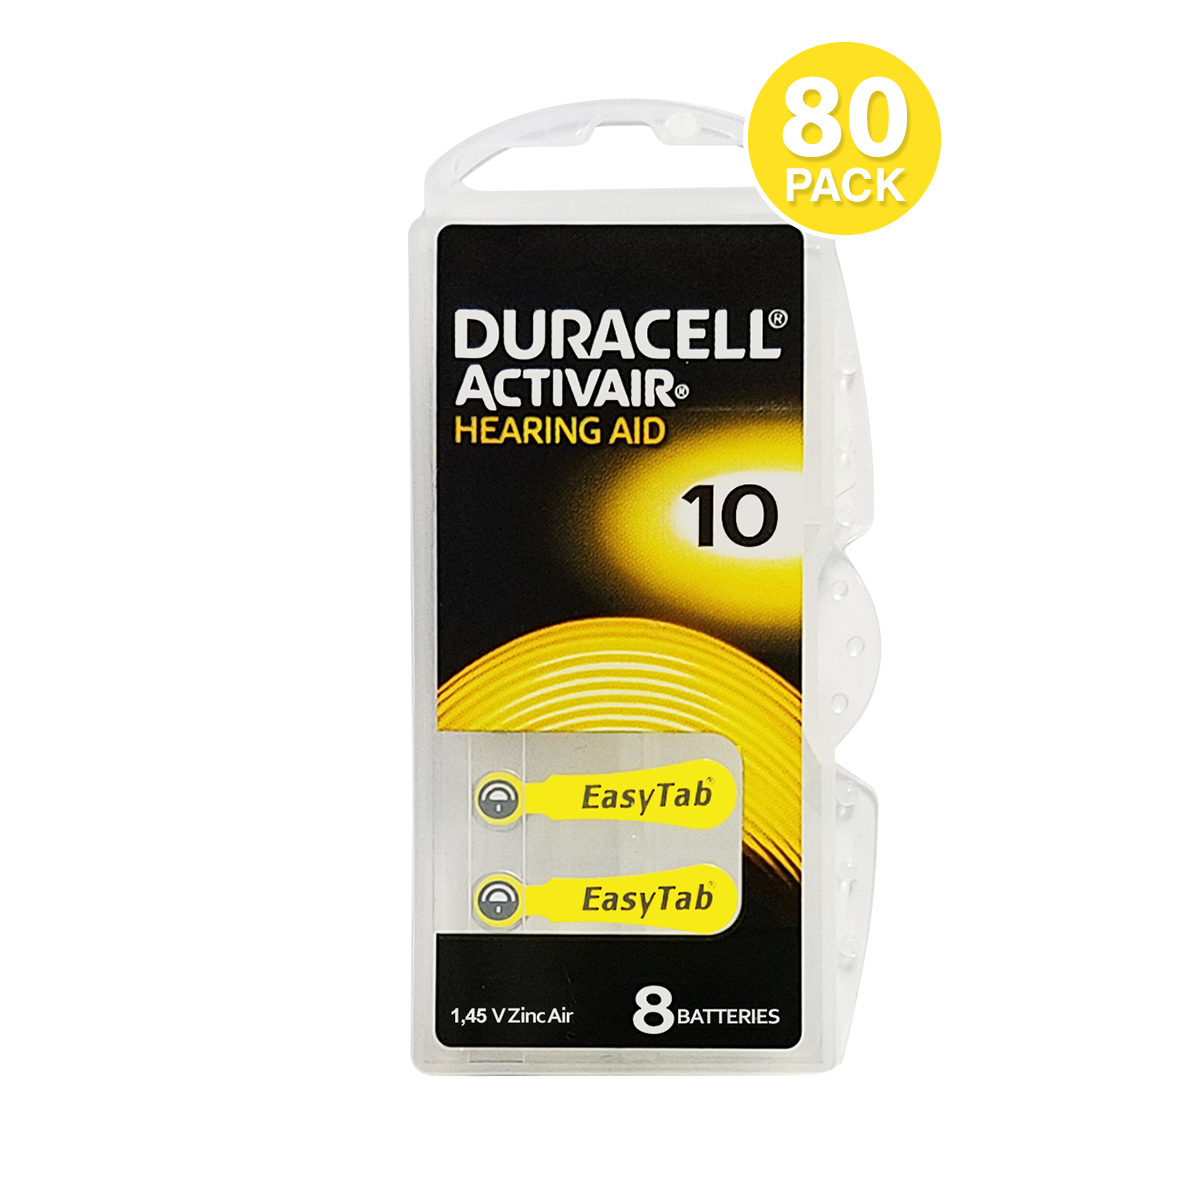 Duracell Activair Size 10 Hearing Aid Batteries, 80 Pcs - Mercury Free